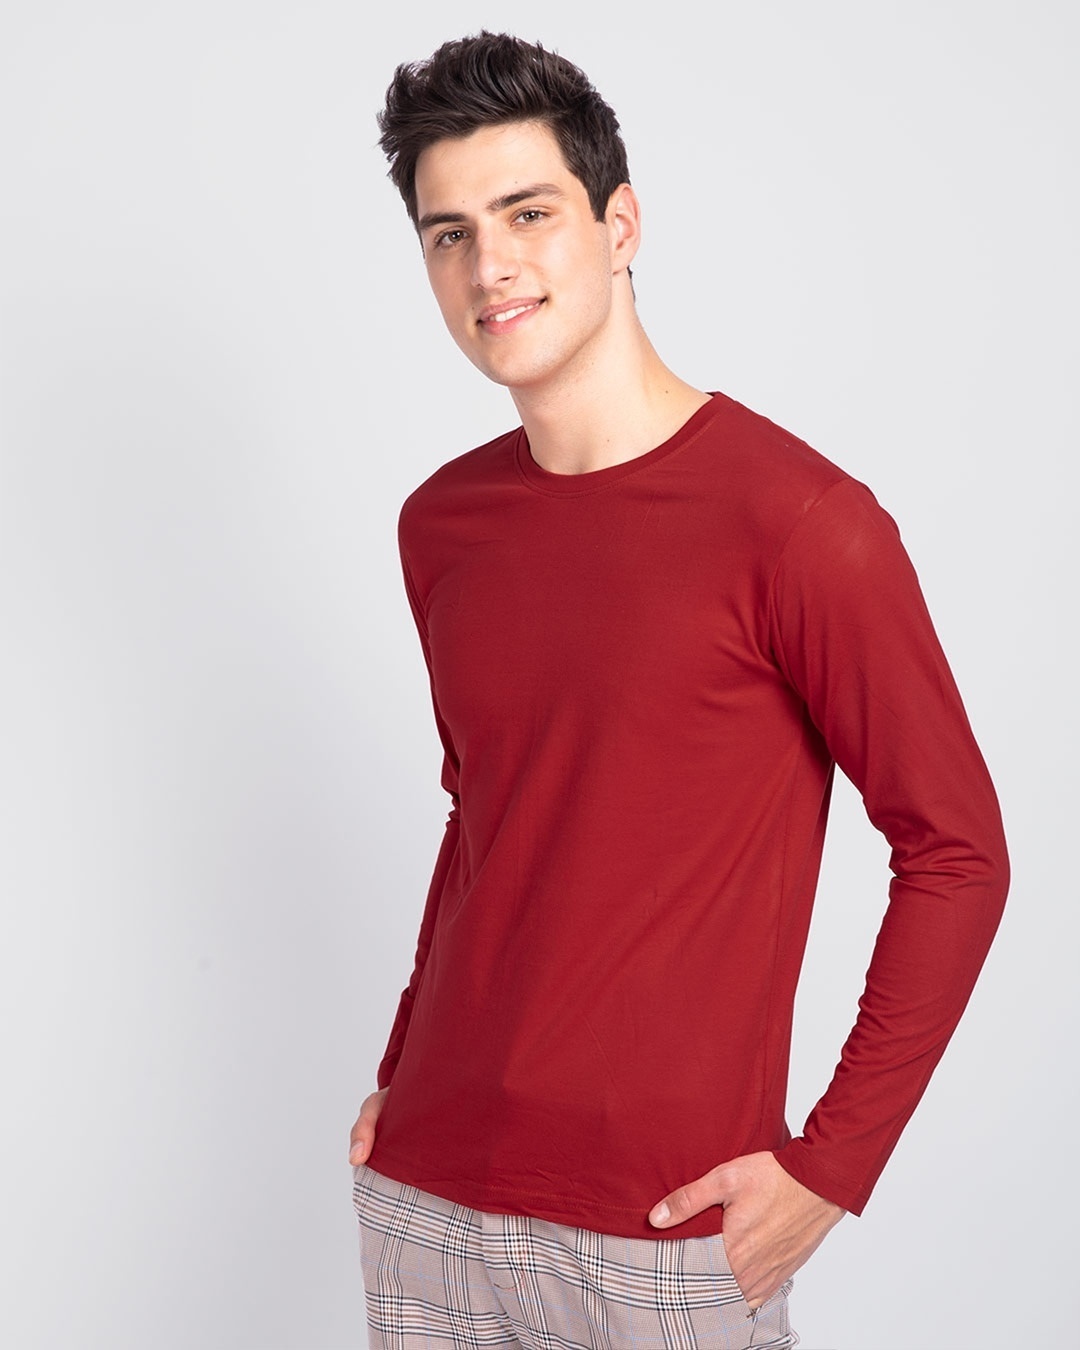 Shop Men's Plain Full Sleeves T-Shirt Pack of 2 (Tropical Blue & Bold Red)